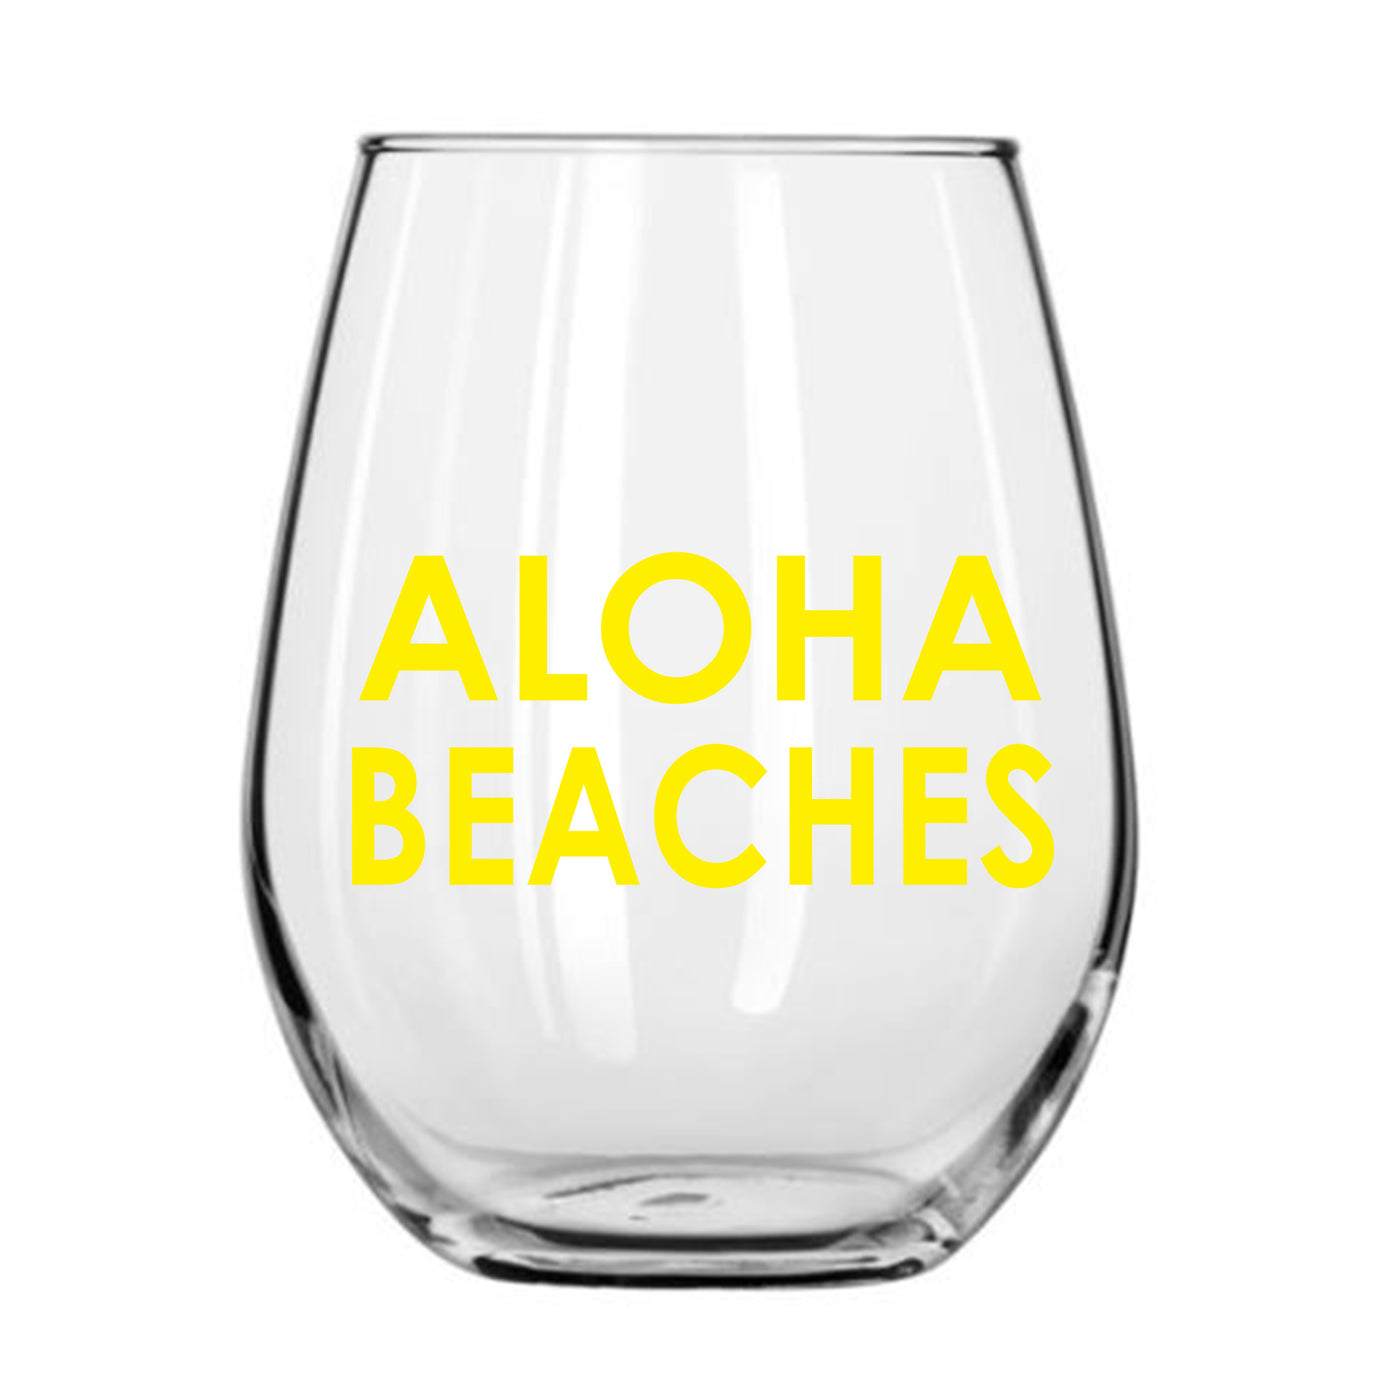 ALOHA BEACHES WINE GLASS